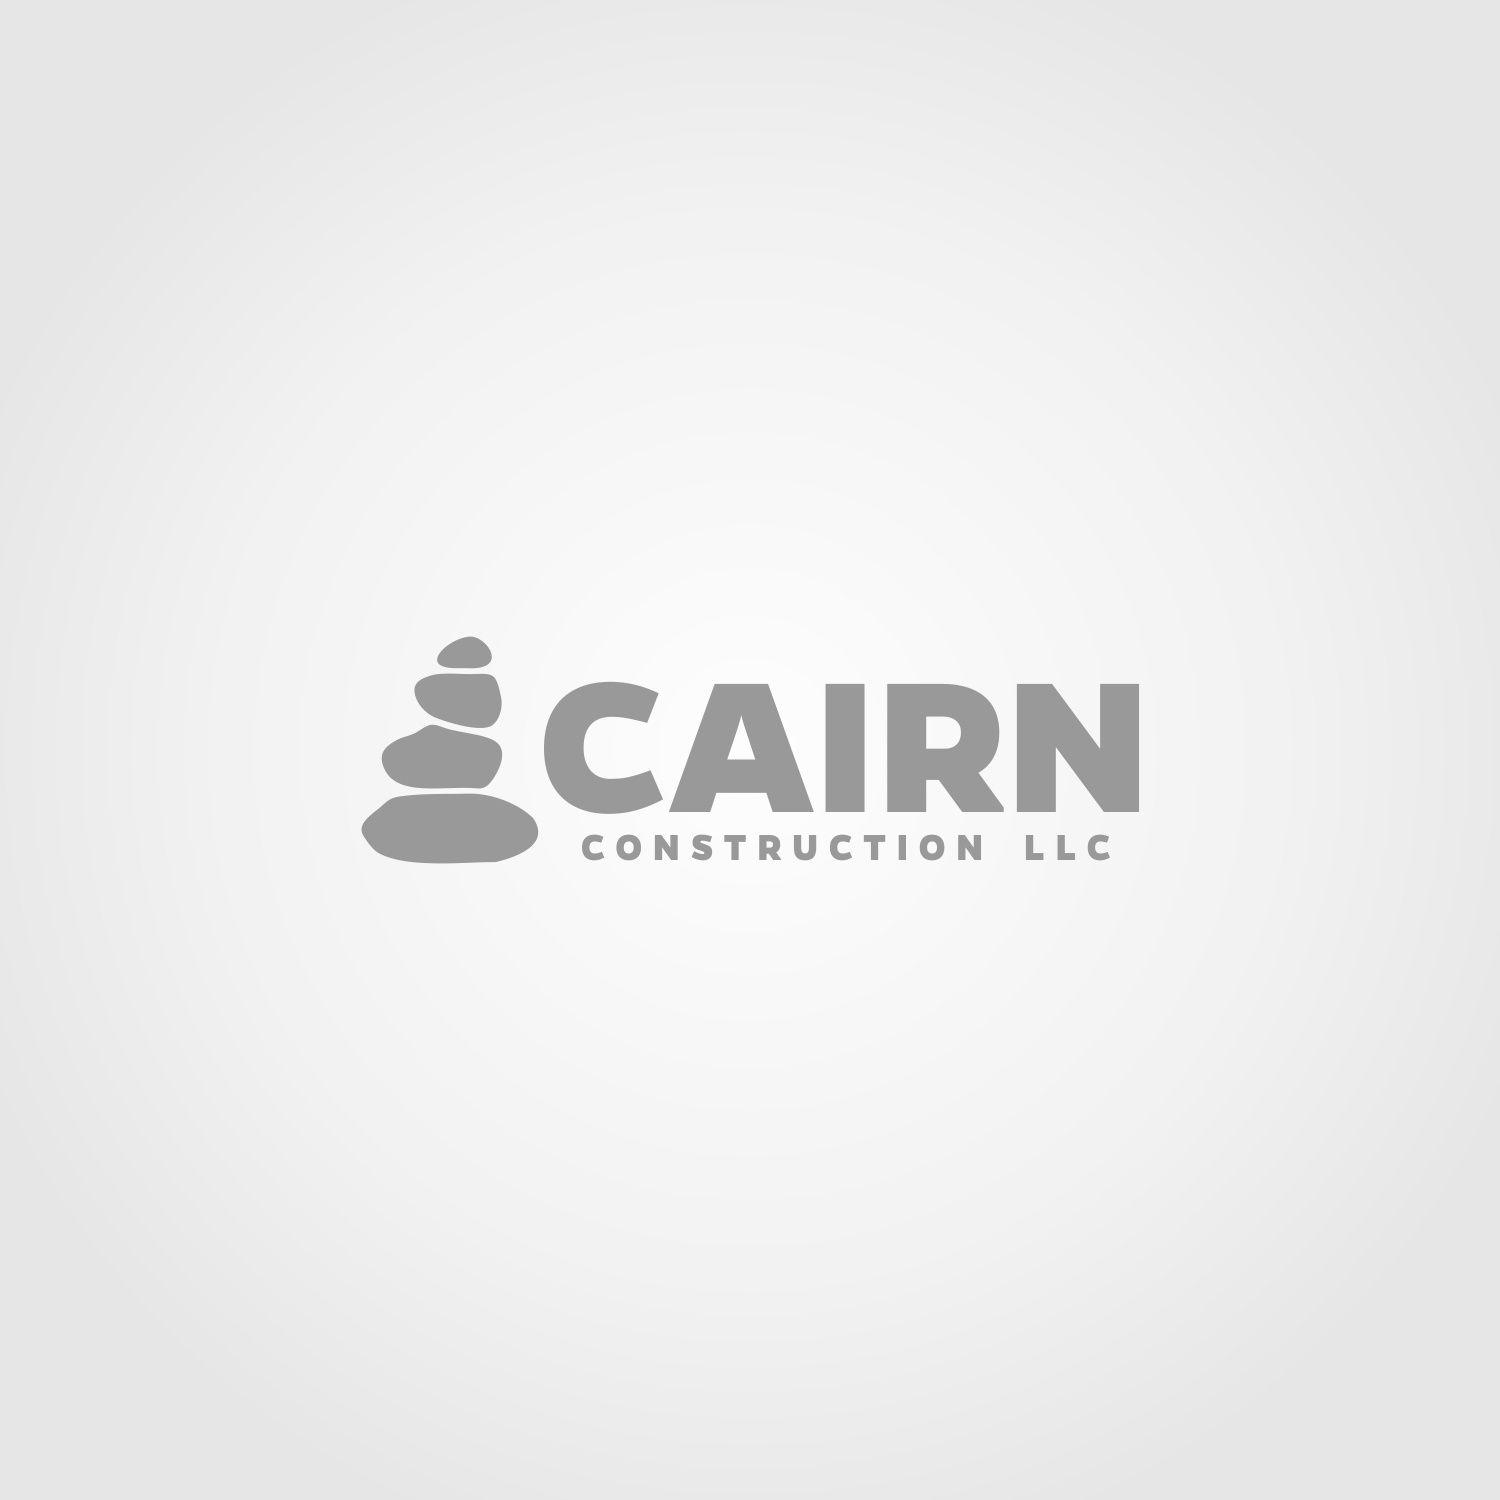 Cairn Logo - Bold, Personable Logo Design for Cairn Construction llc.